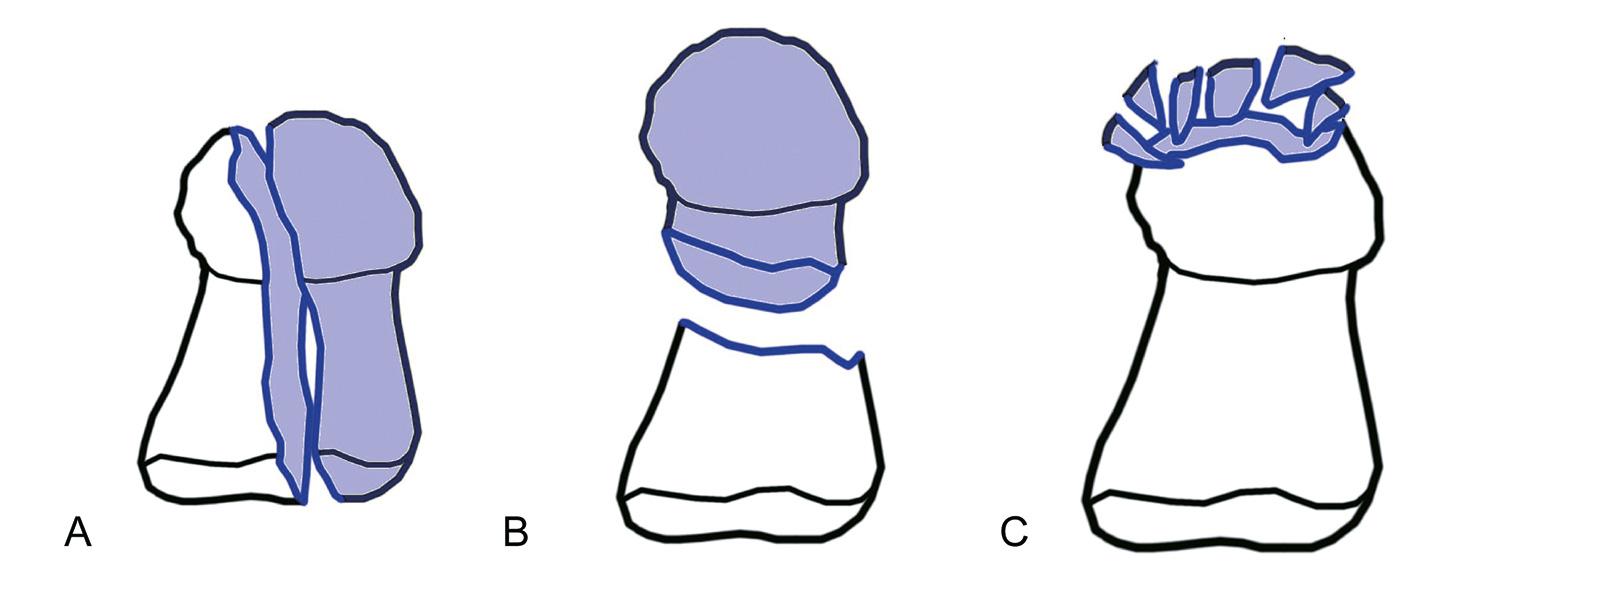 Abb. 7-3: Frakturen der distalen Phalanx: Längsbruch (A), Querbruch (B) und Nagelkranztrümmerbruch (C)